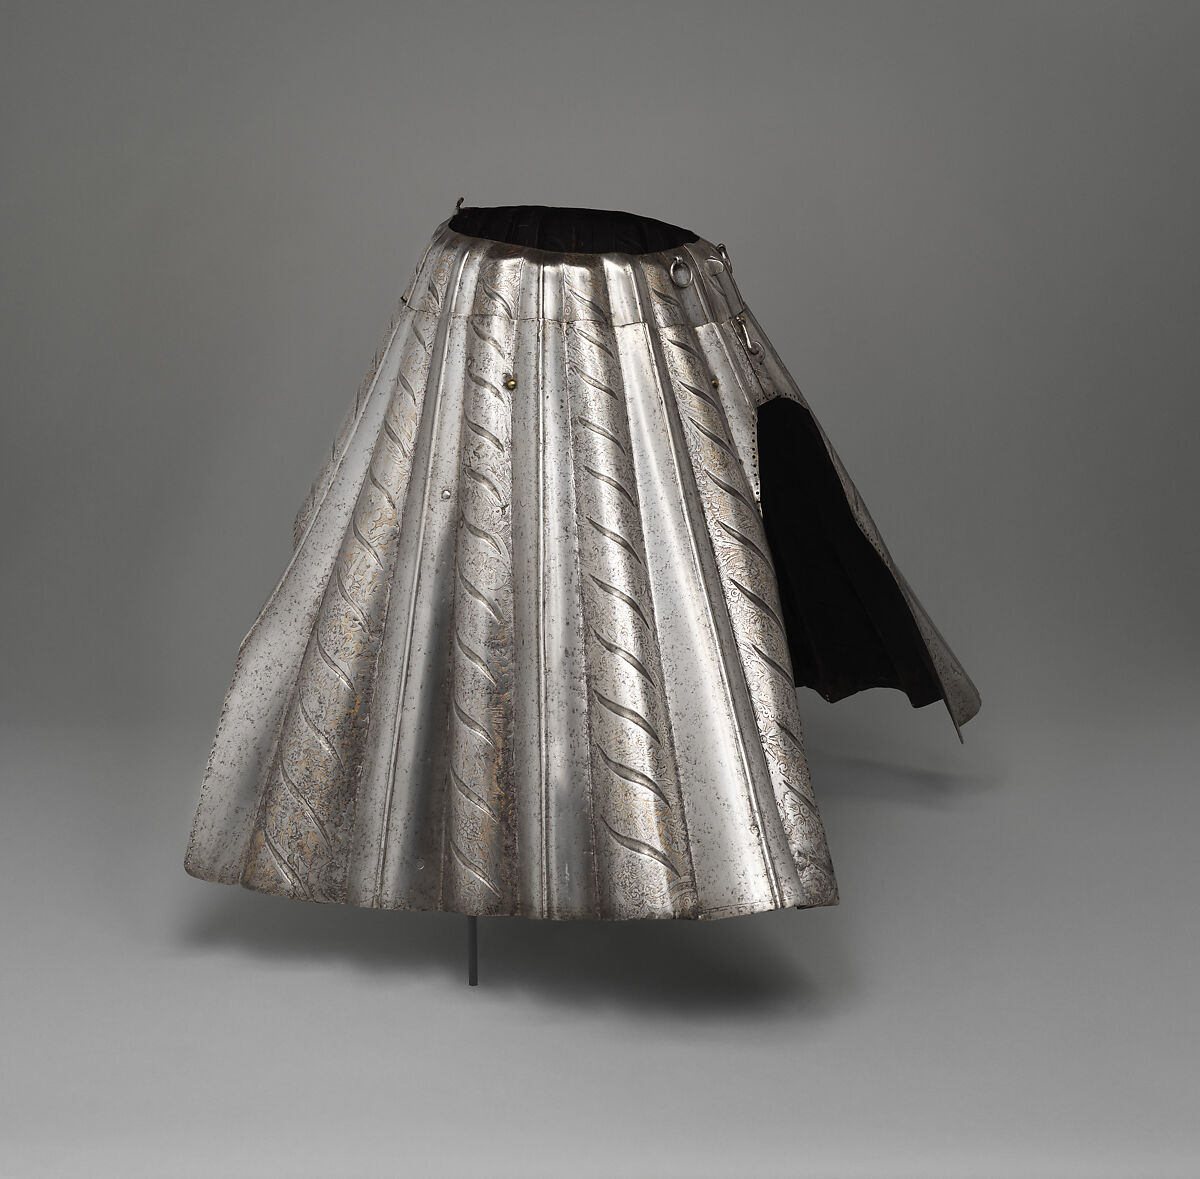 Armored Skirt (Base), Attributed to Konrad Seusenhofer (Austrian, Innsbruck, died 1517), Steel, gold, Austrian, Innsbruck 